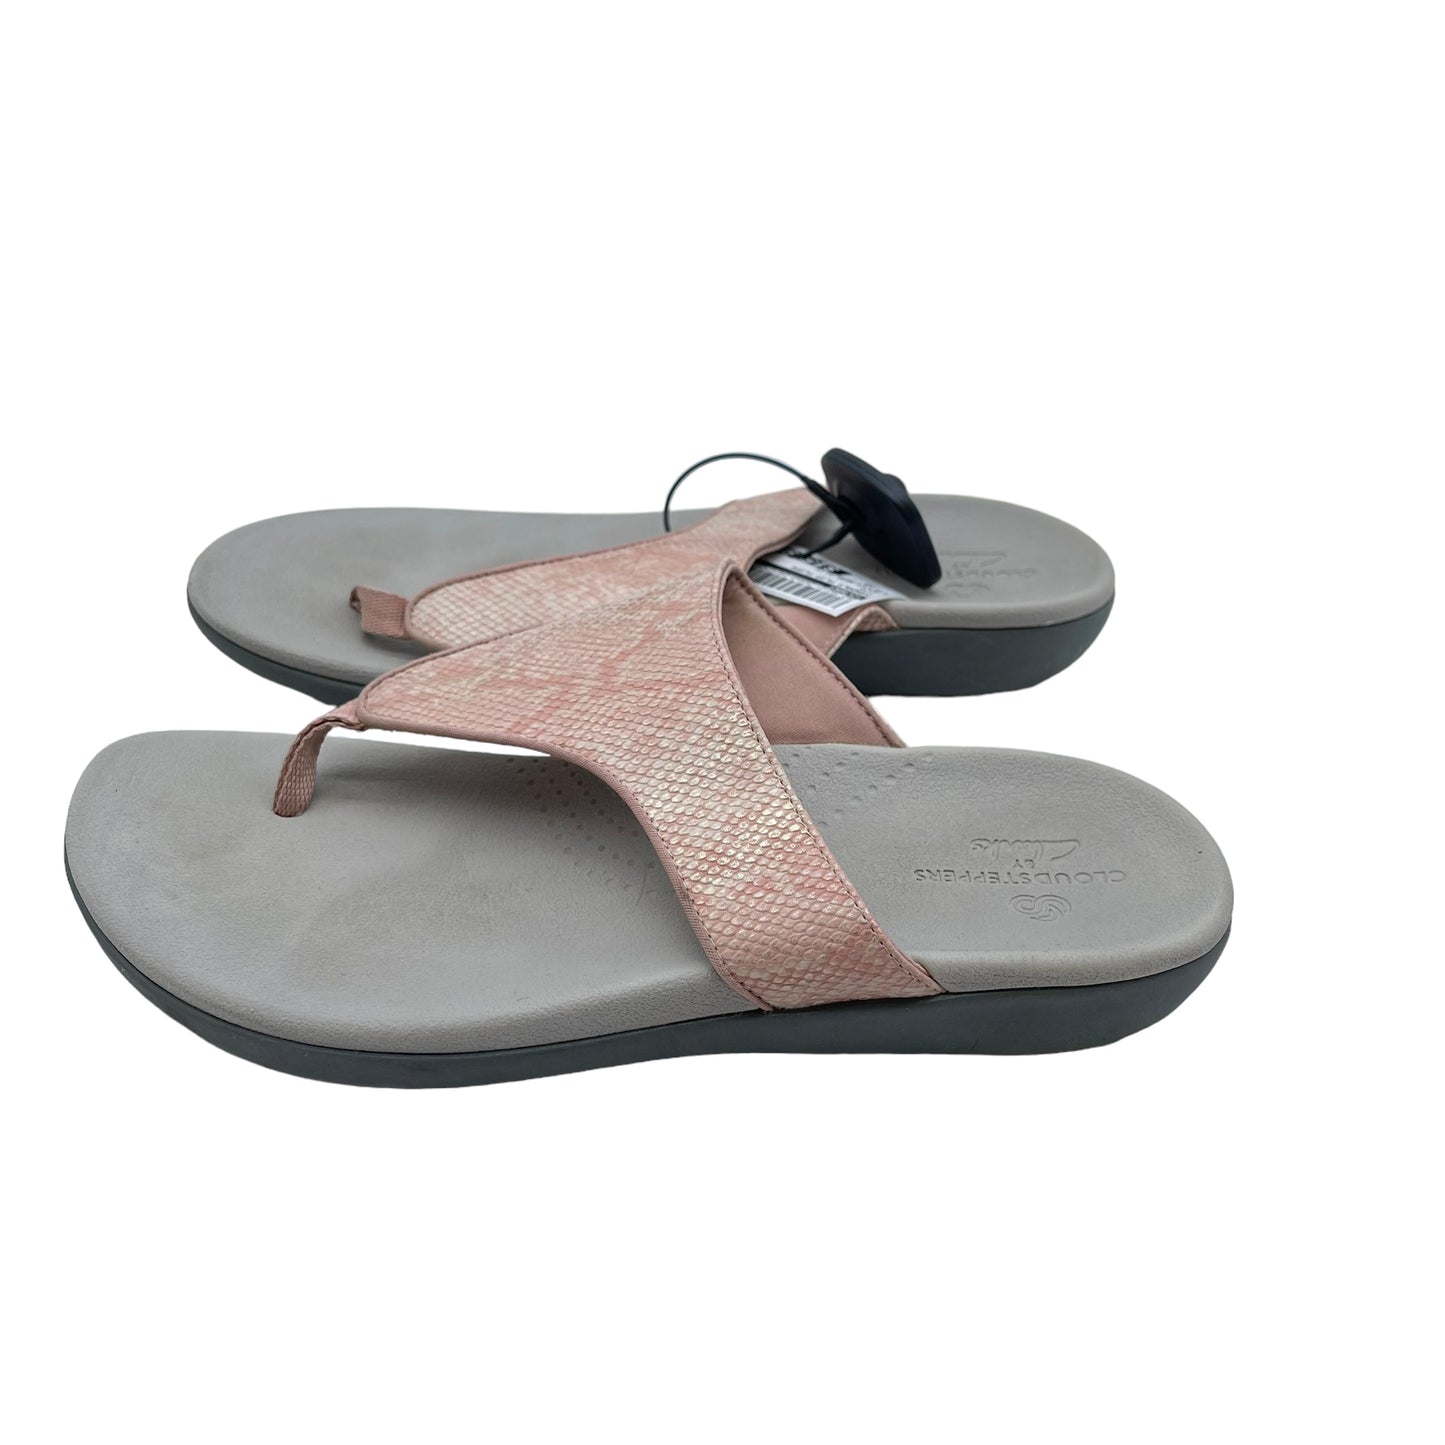 Sandals Flip Flops By Clarks  Size: 10